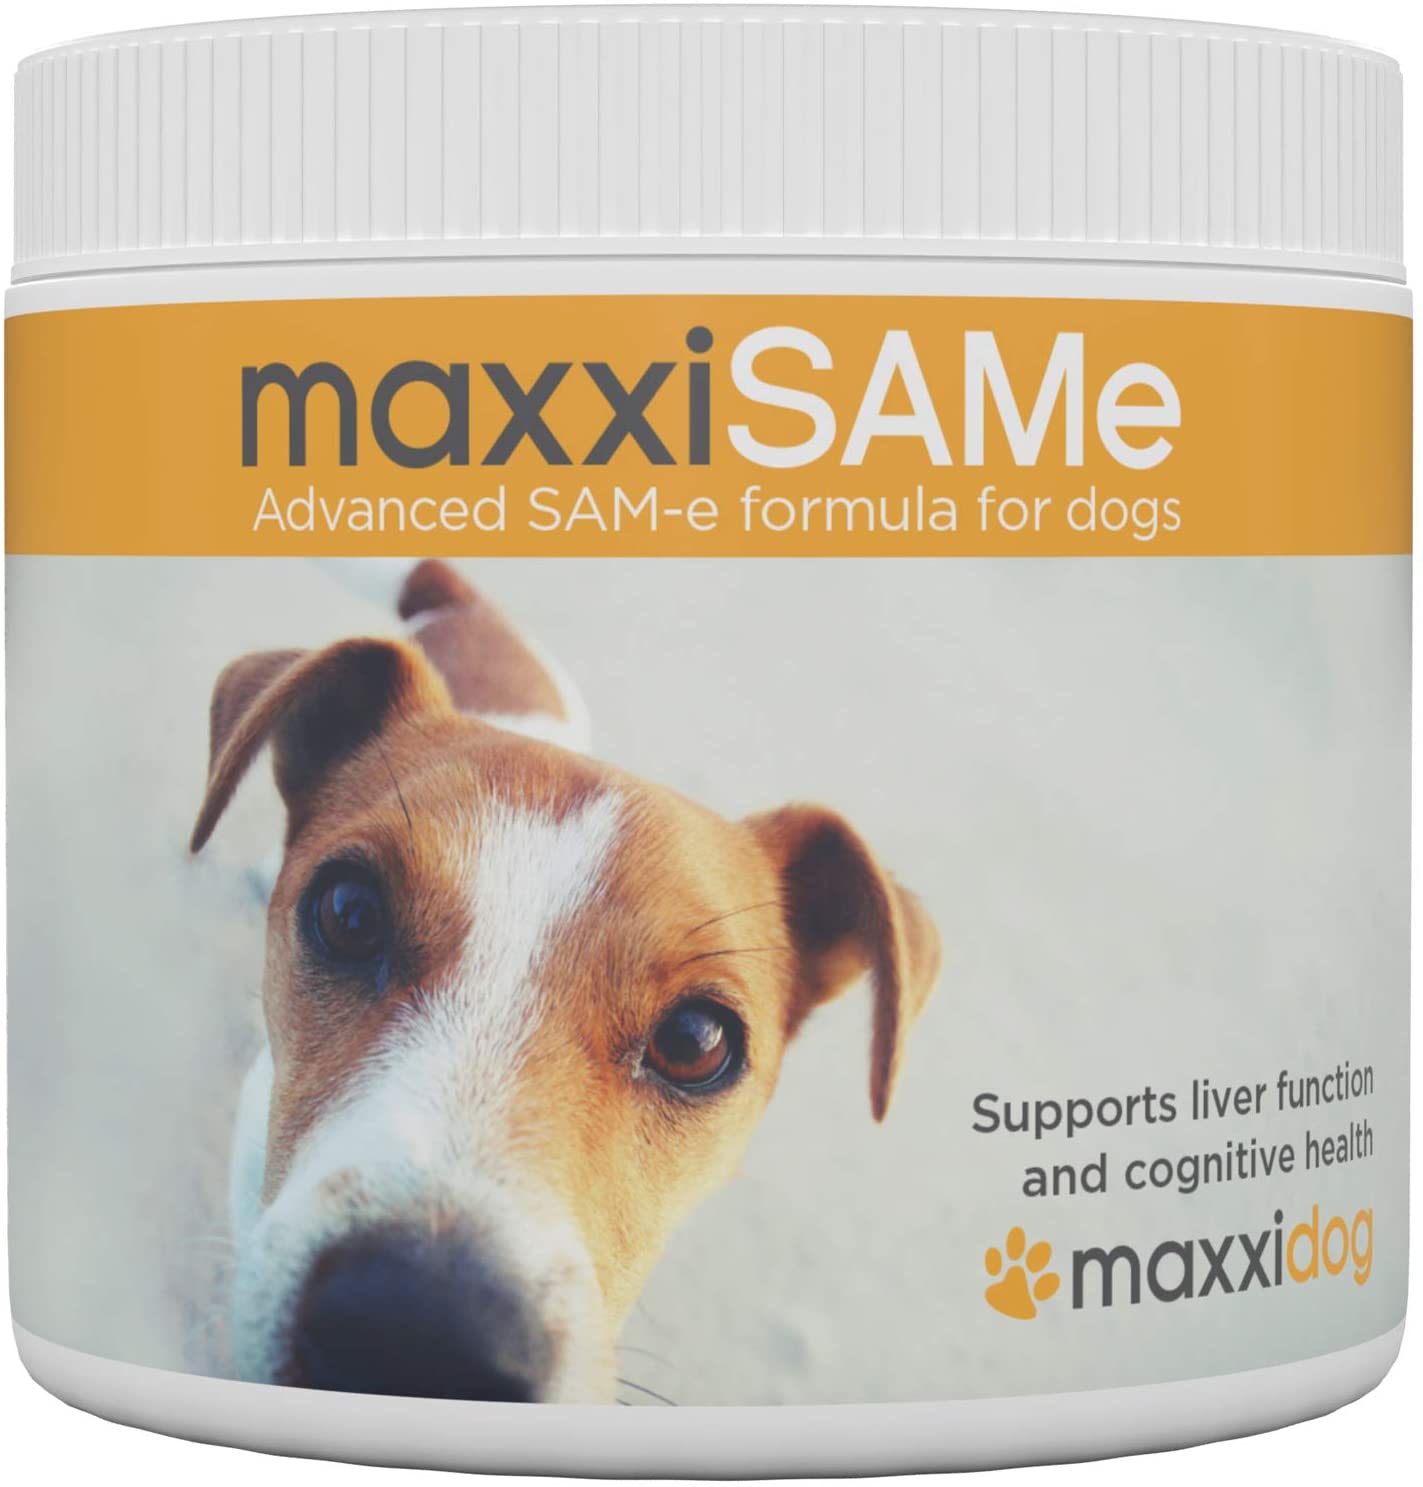 maxxipaws-maxxiSAMe-Advanced-SAM-e-Cognitive-Supplement-Powder